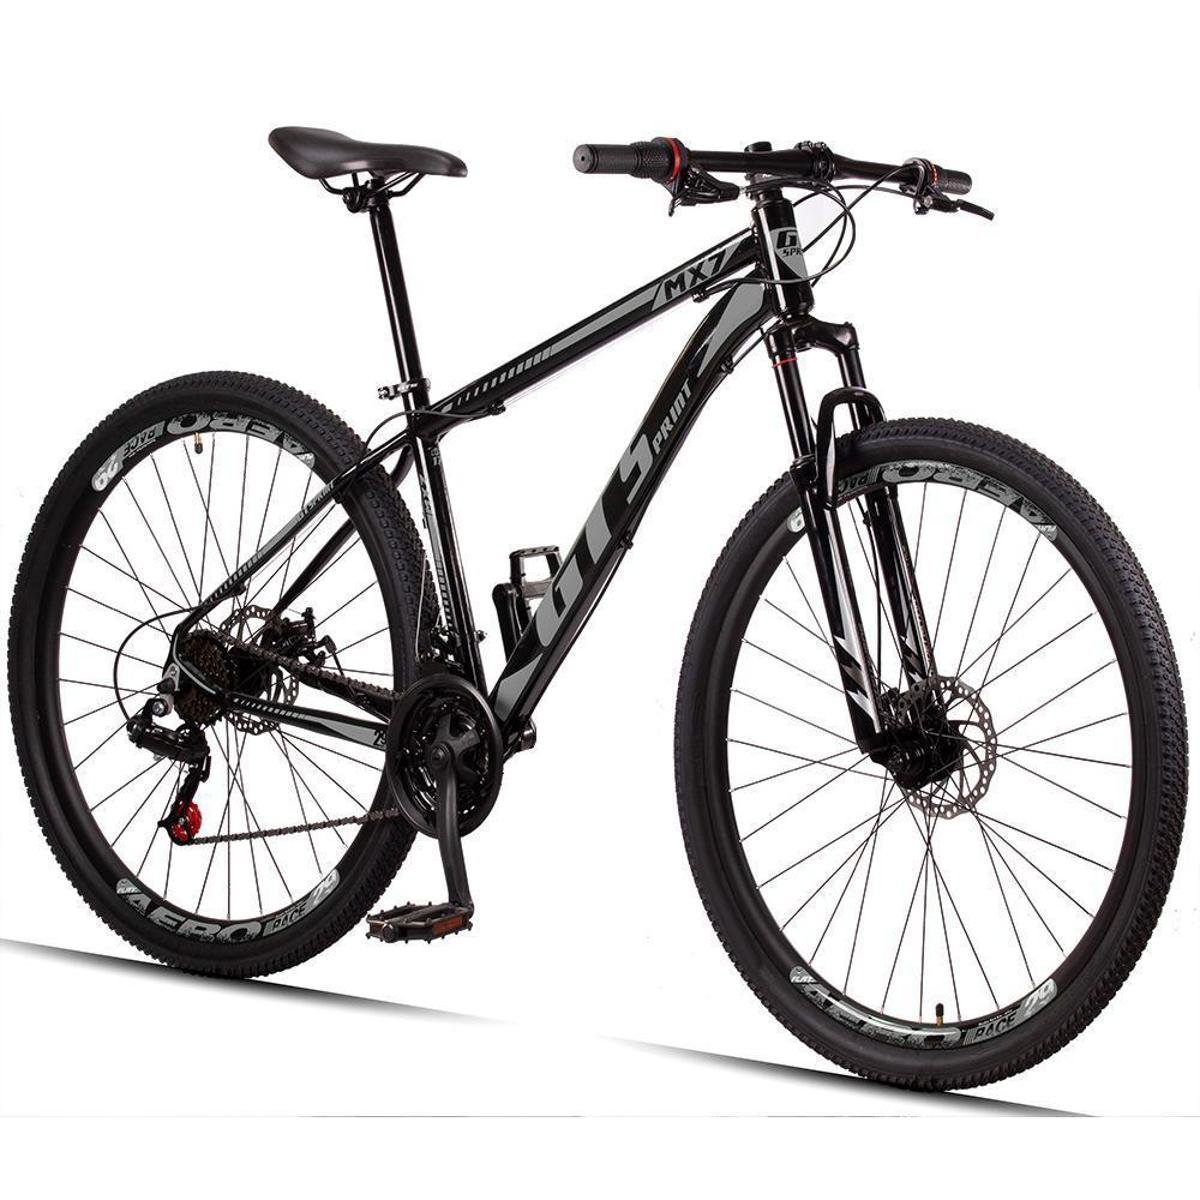 Bicicleta aro 29 GT Sprint mx7 21v freio disco MTB alumínio – Preto+Cinza